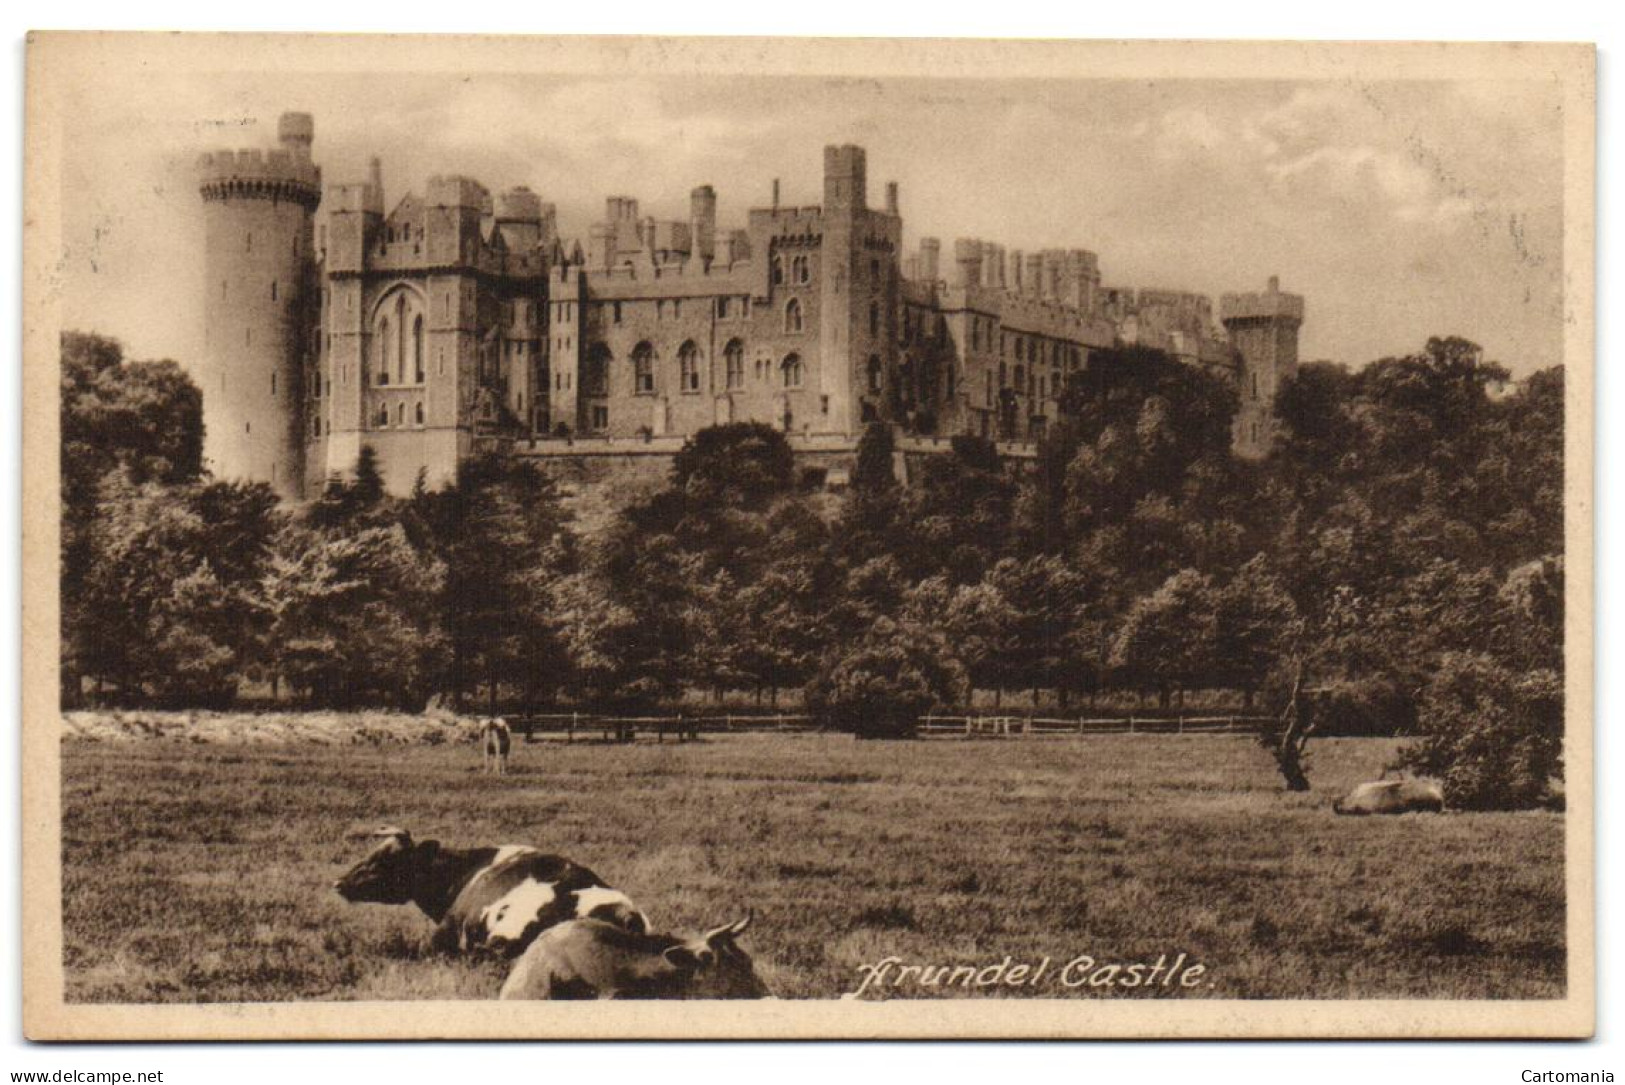 Arundel Castle - Arundel